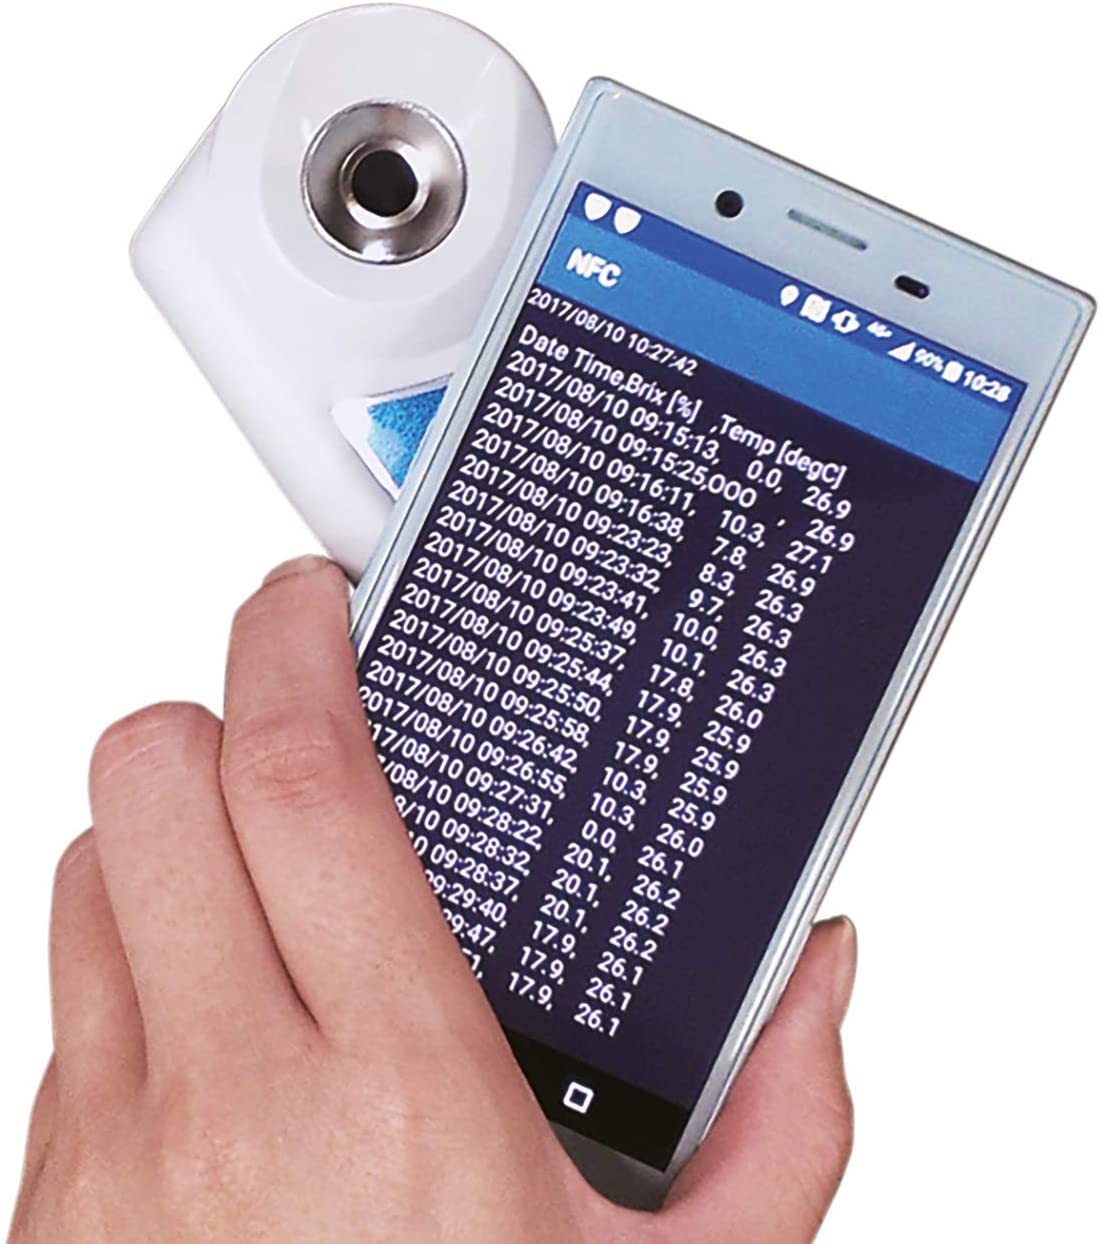 Atago 3820 PAL-2 Digital Pocket Brix Refractometer, PAL Series,  Brix : 45.0 to 93.0 % Measurement Range